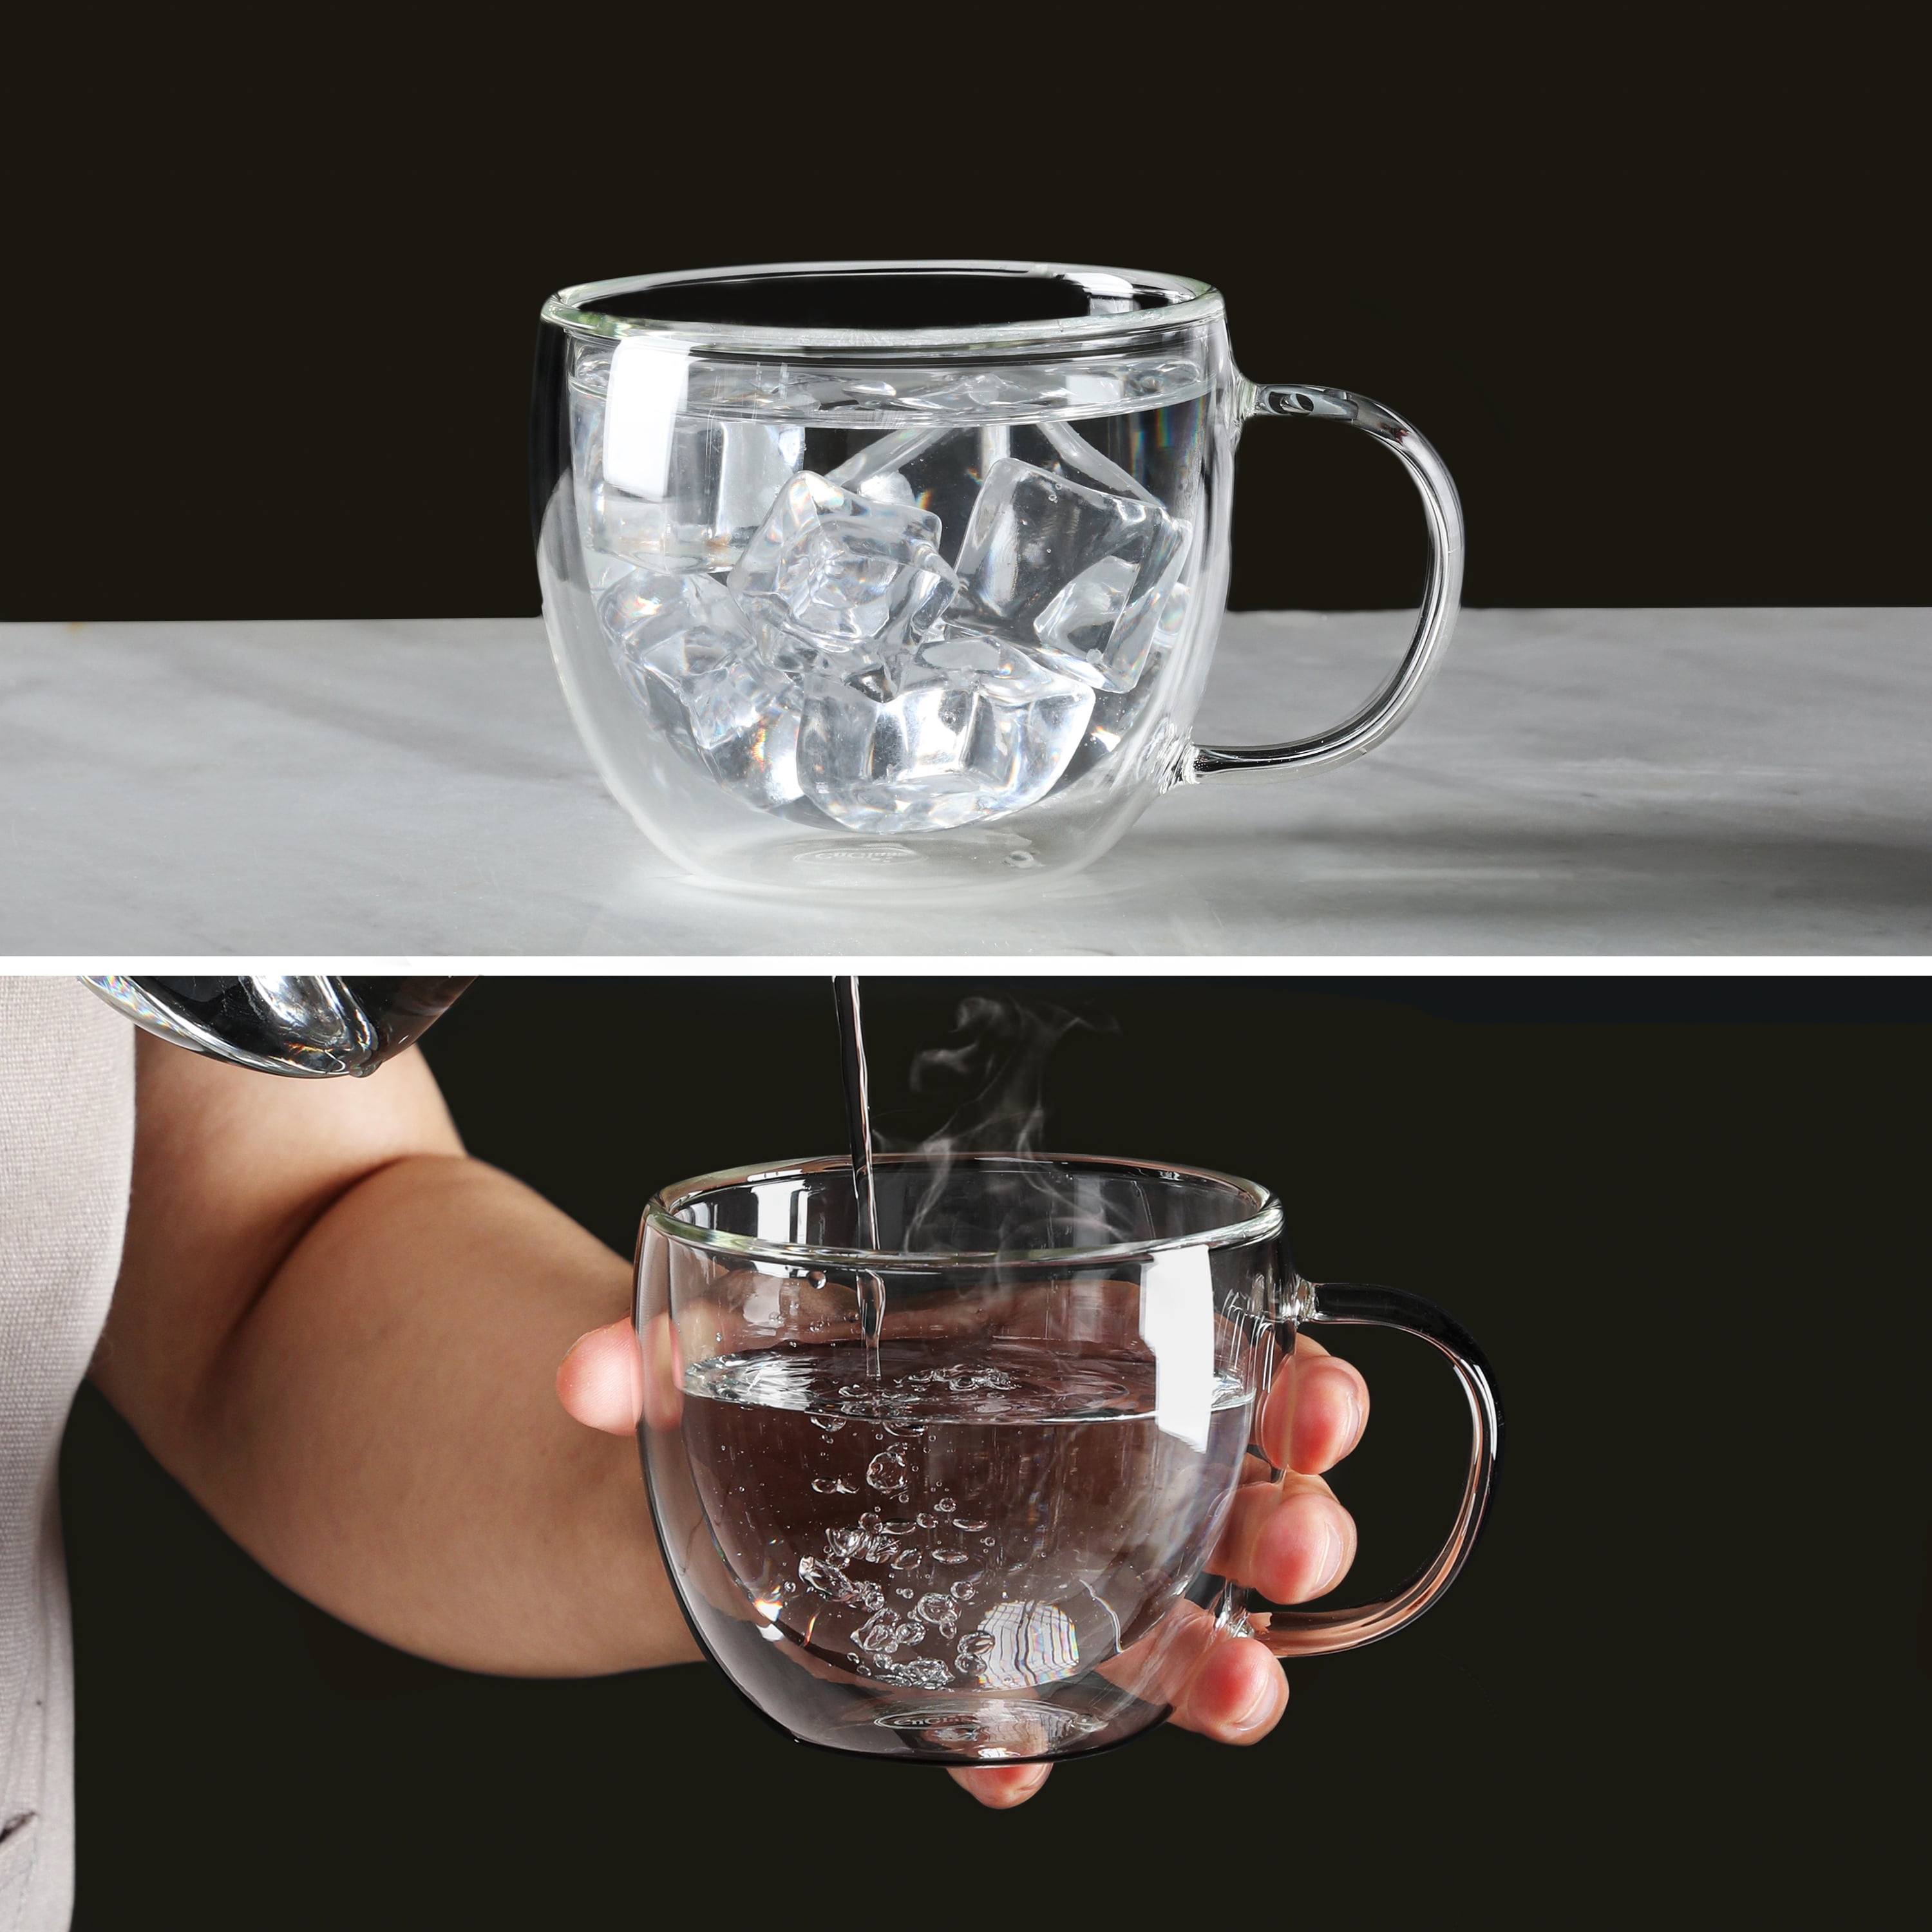 CnGlass 8oz Double Wall Glass Coffee Mugs,Clear Insulated Espresso